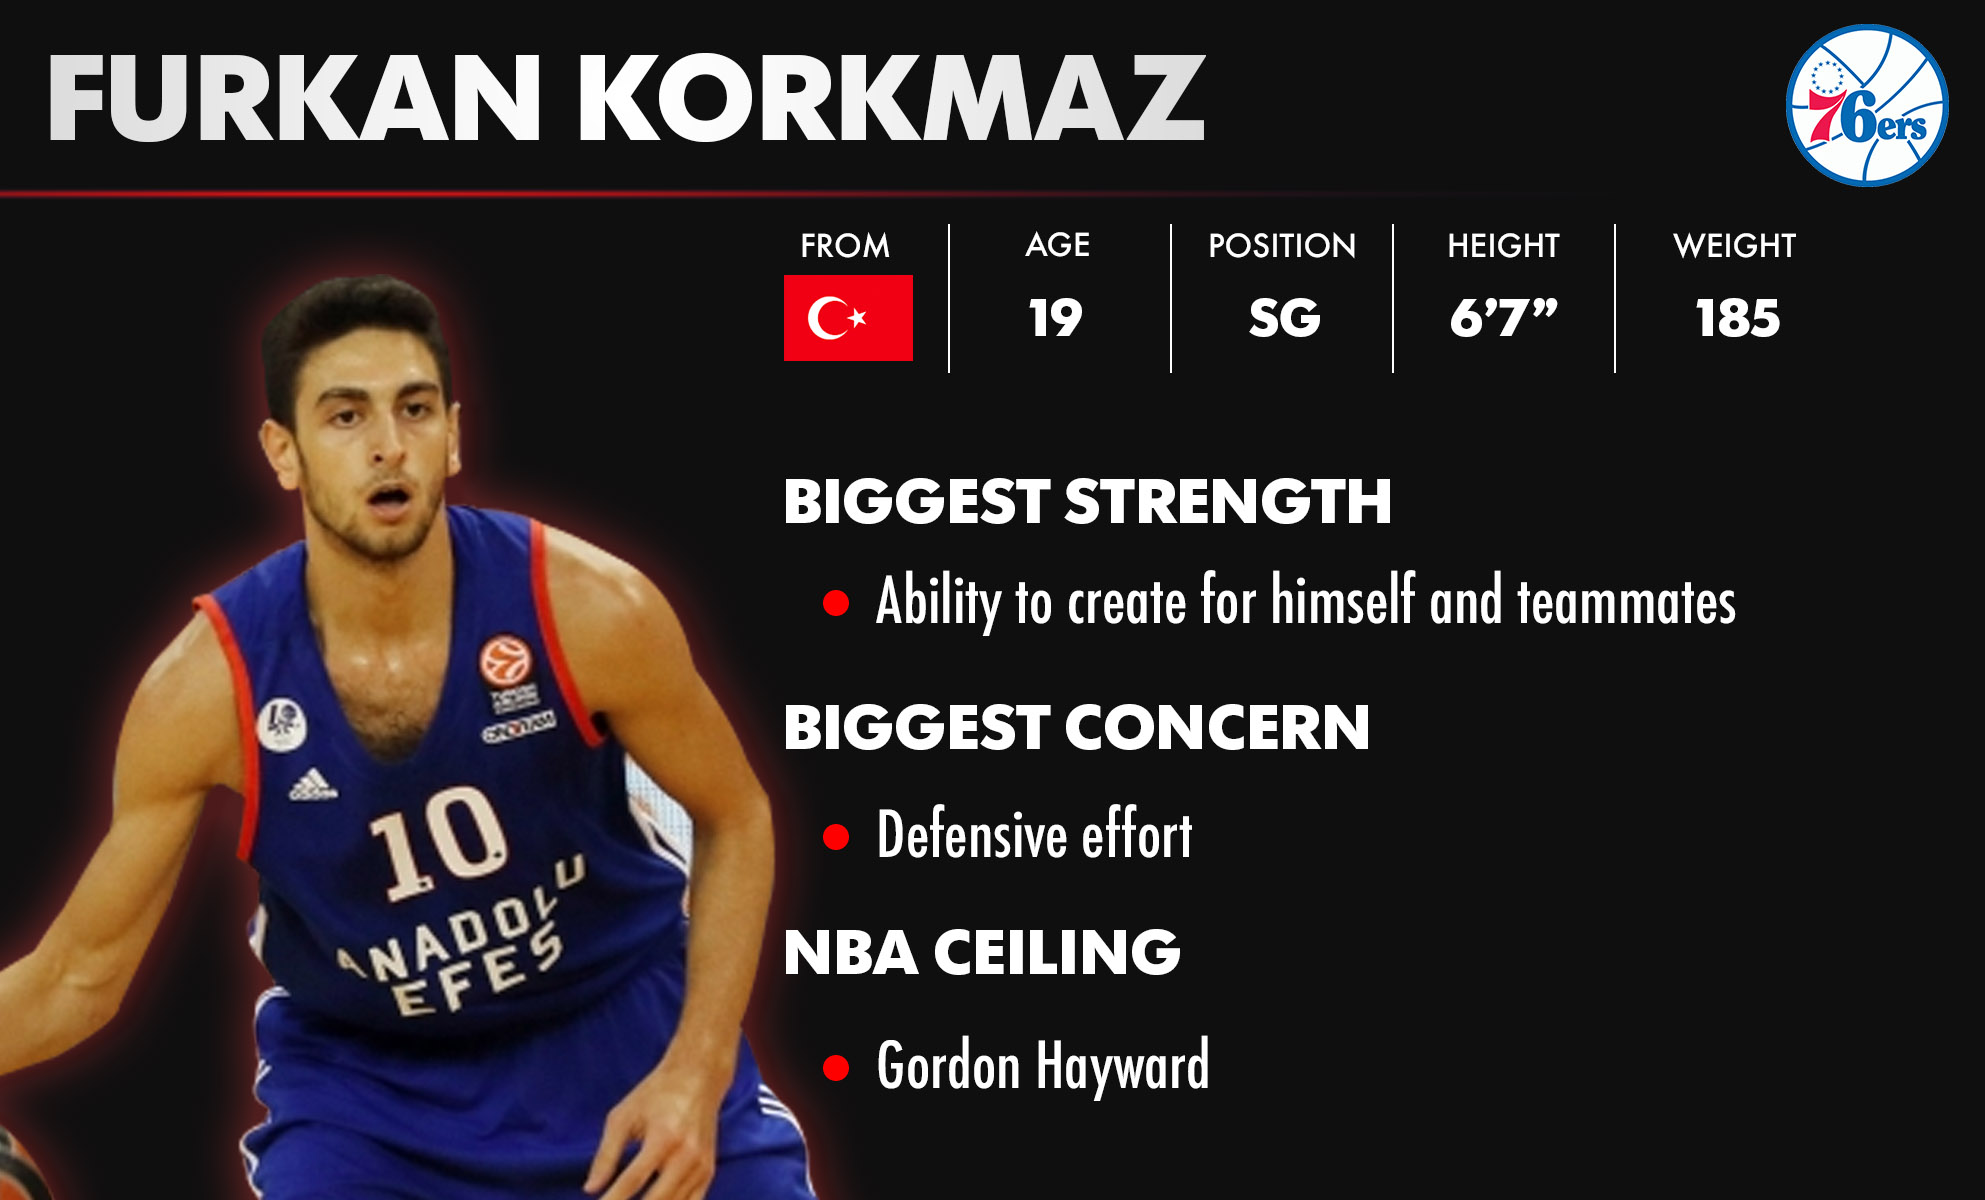 Meet 76ers draft pick Furkan Korkmaz, who dressed up as Darth